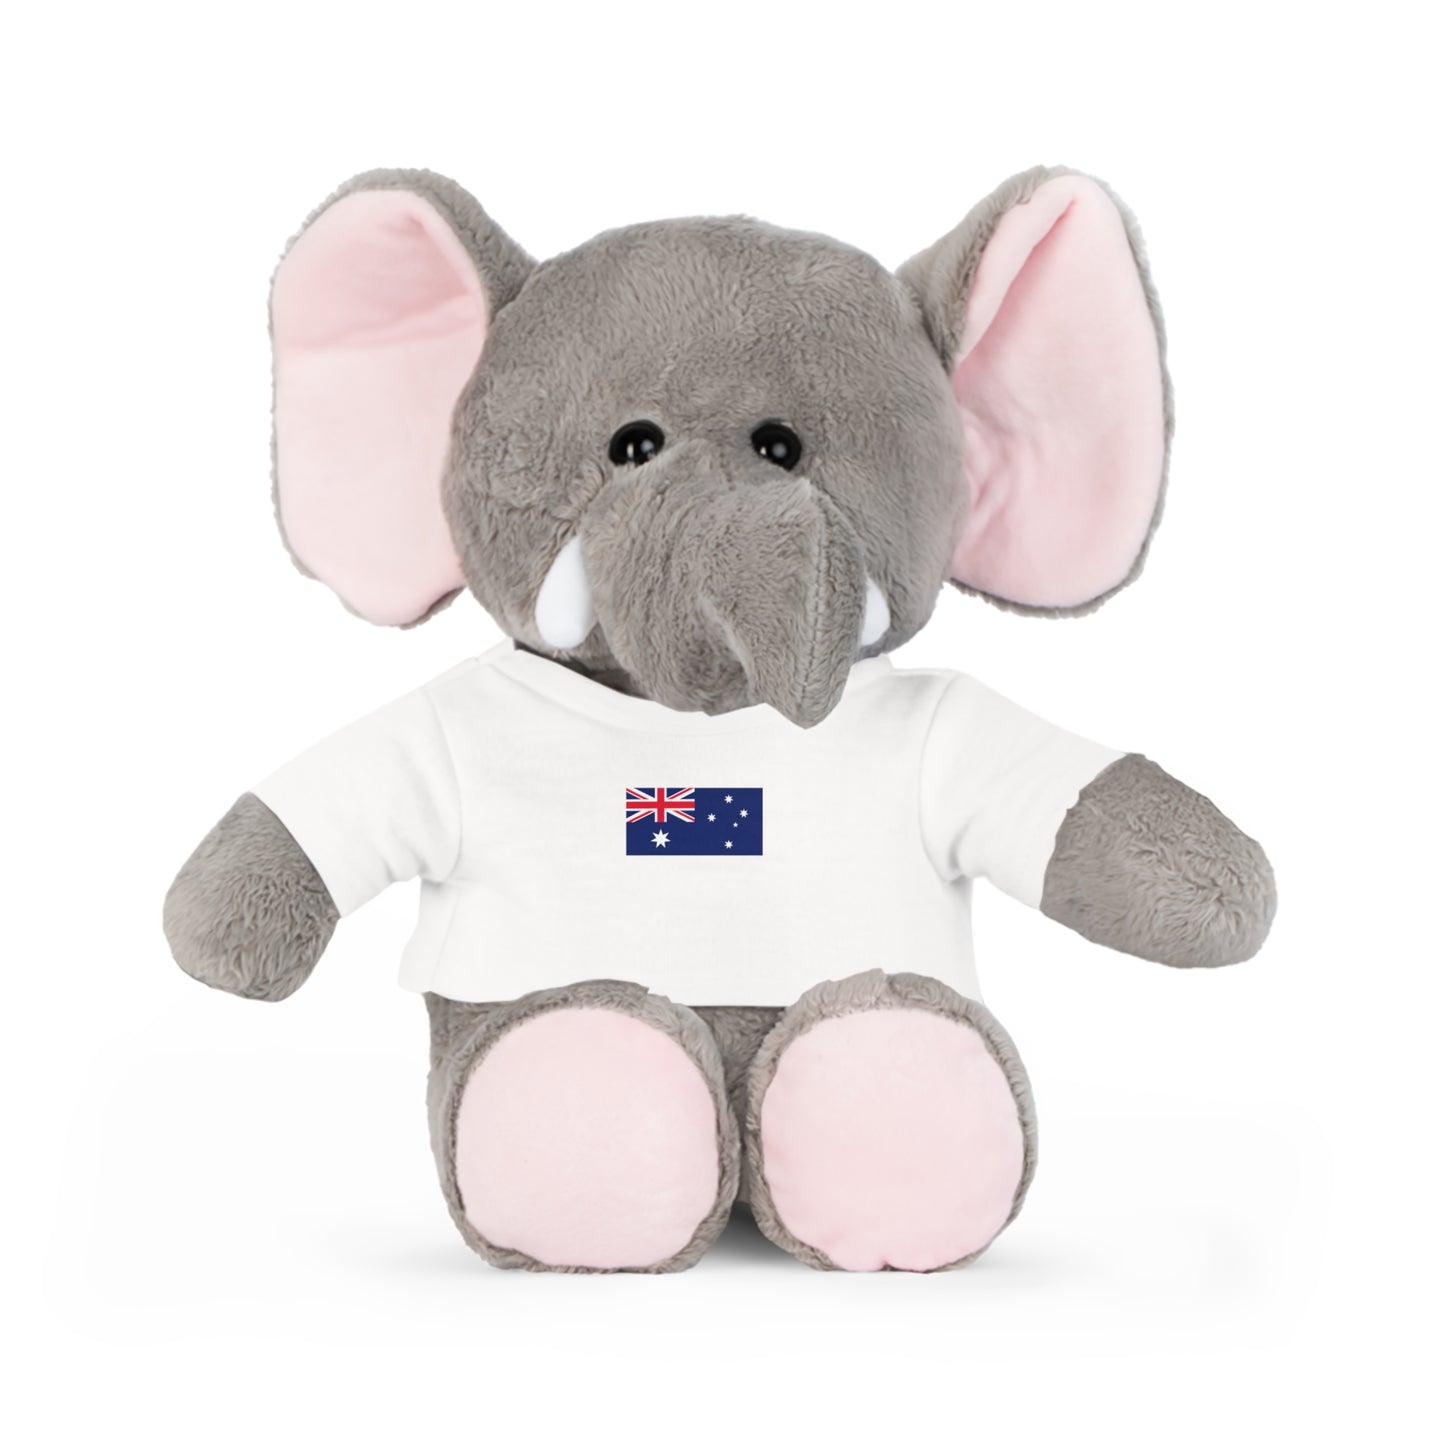 Plush Toy with Australian Flag Shirt